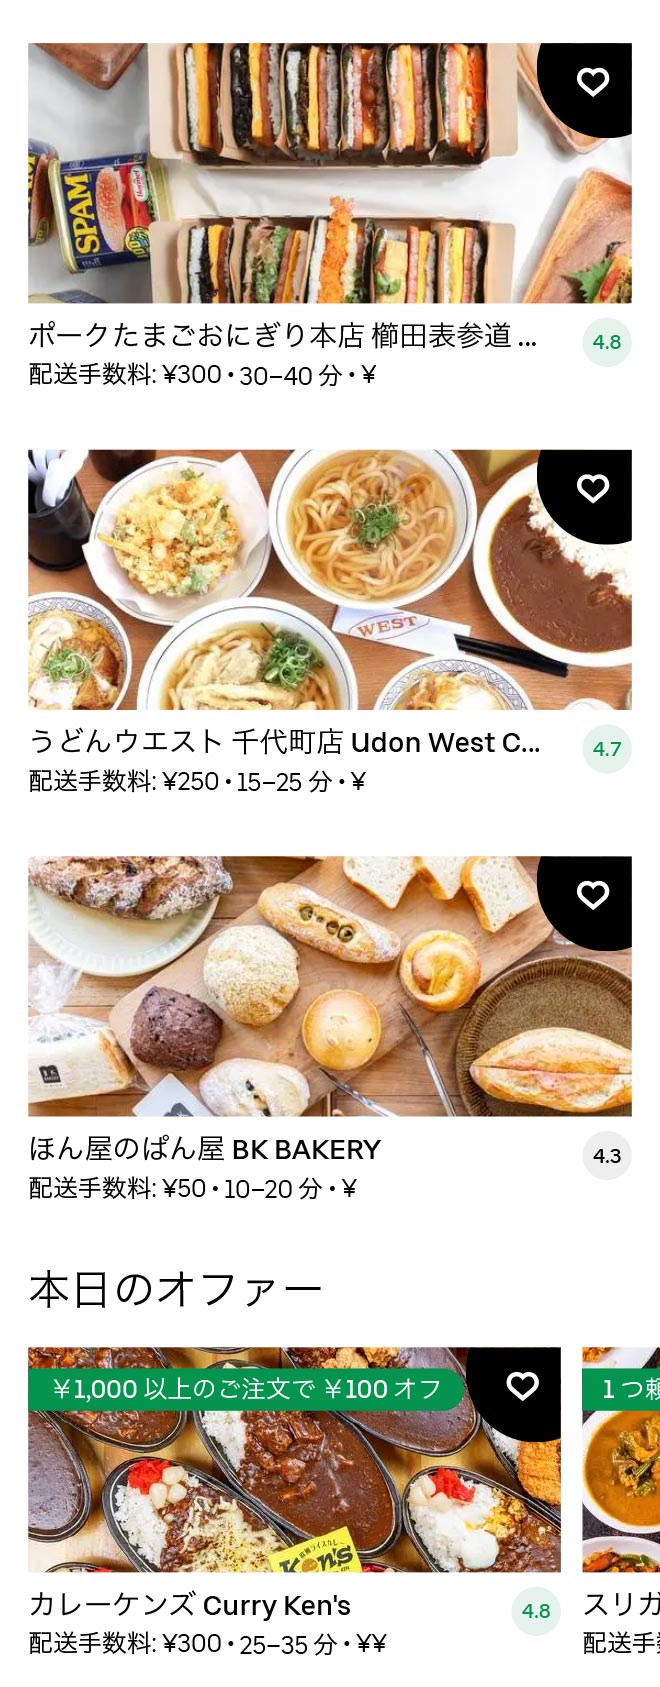 Hakozaki menu 2101 10